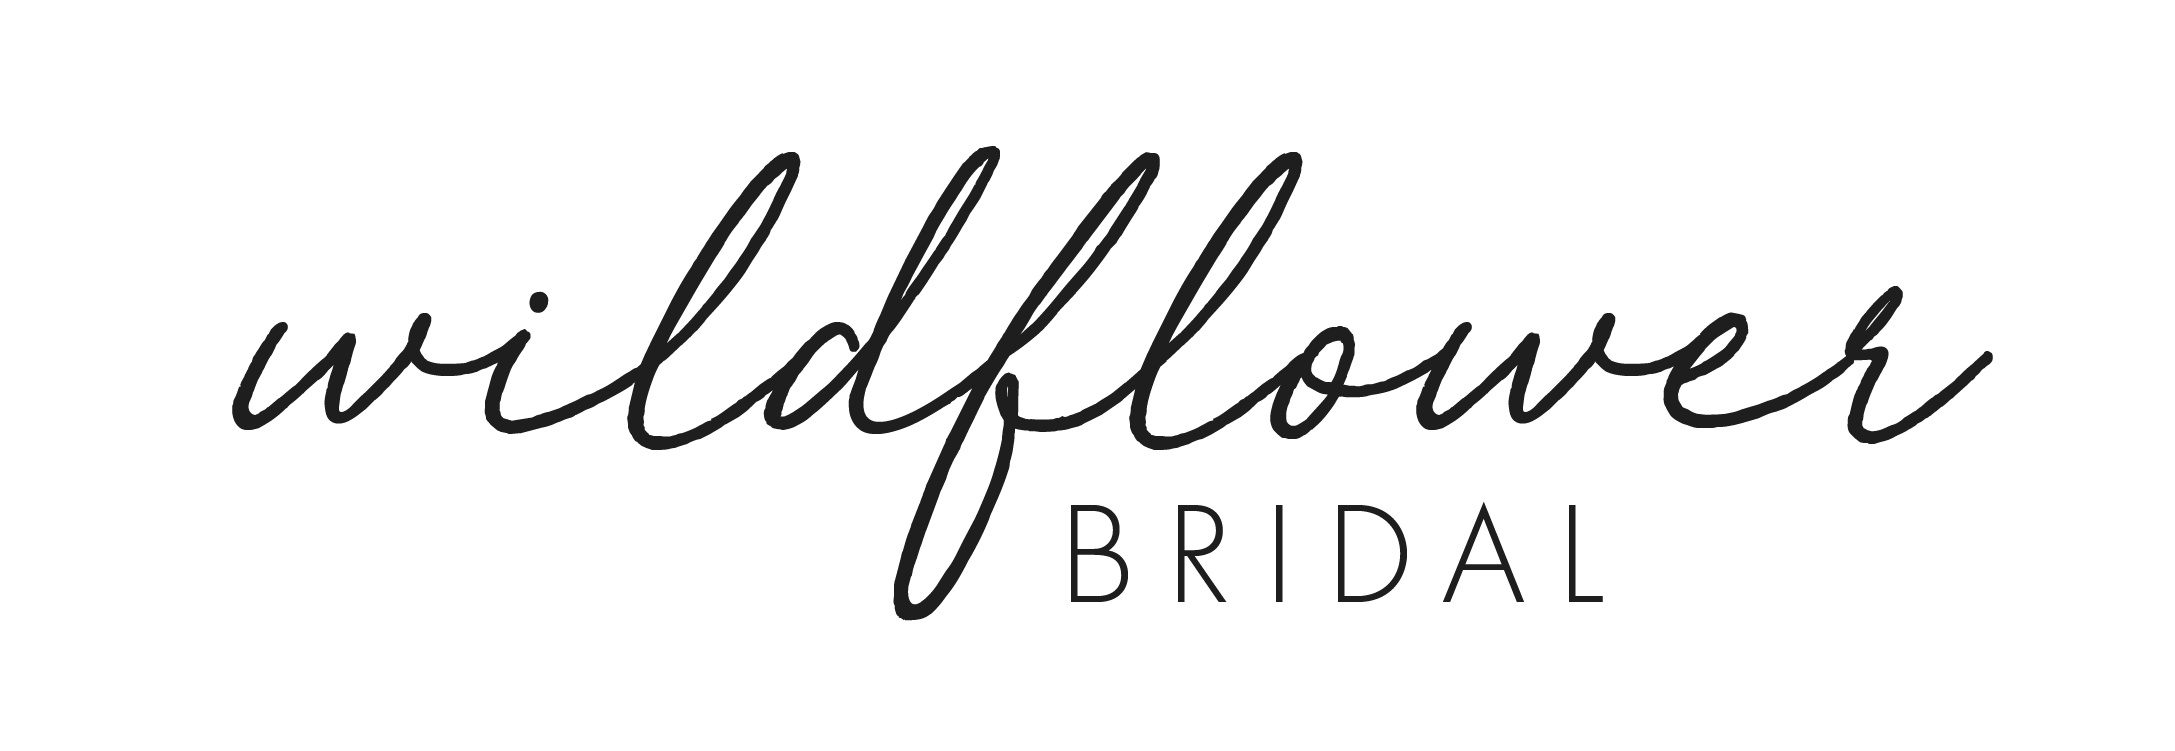  asheville  wedding  vendor  Blog  WILDFLOWER BRIDAL 